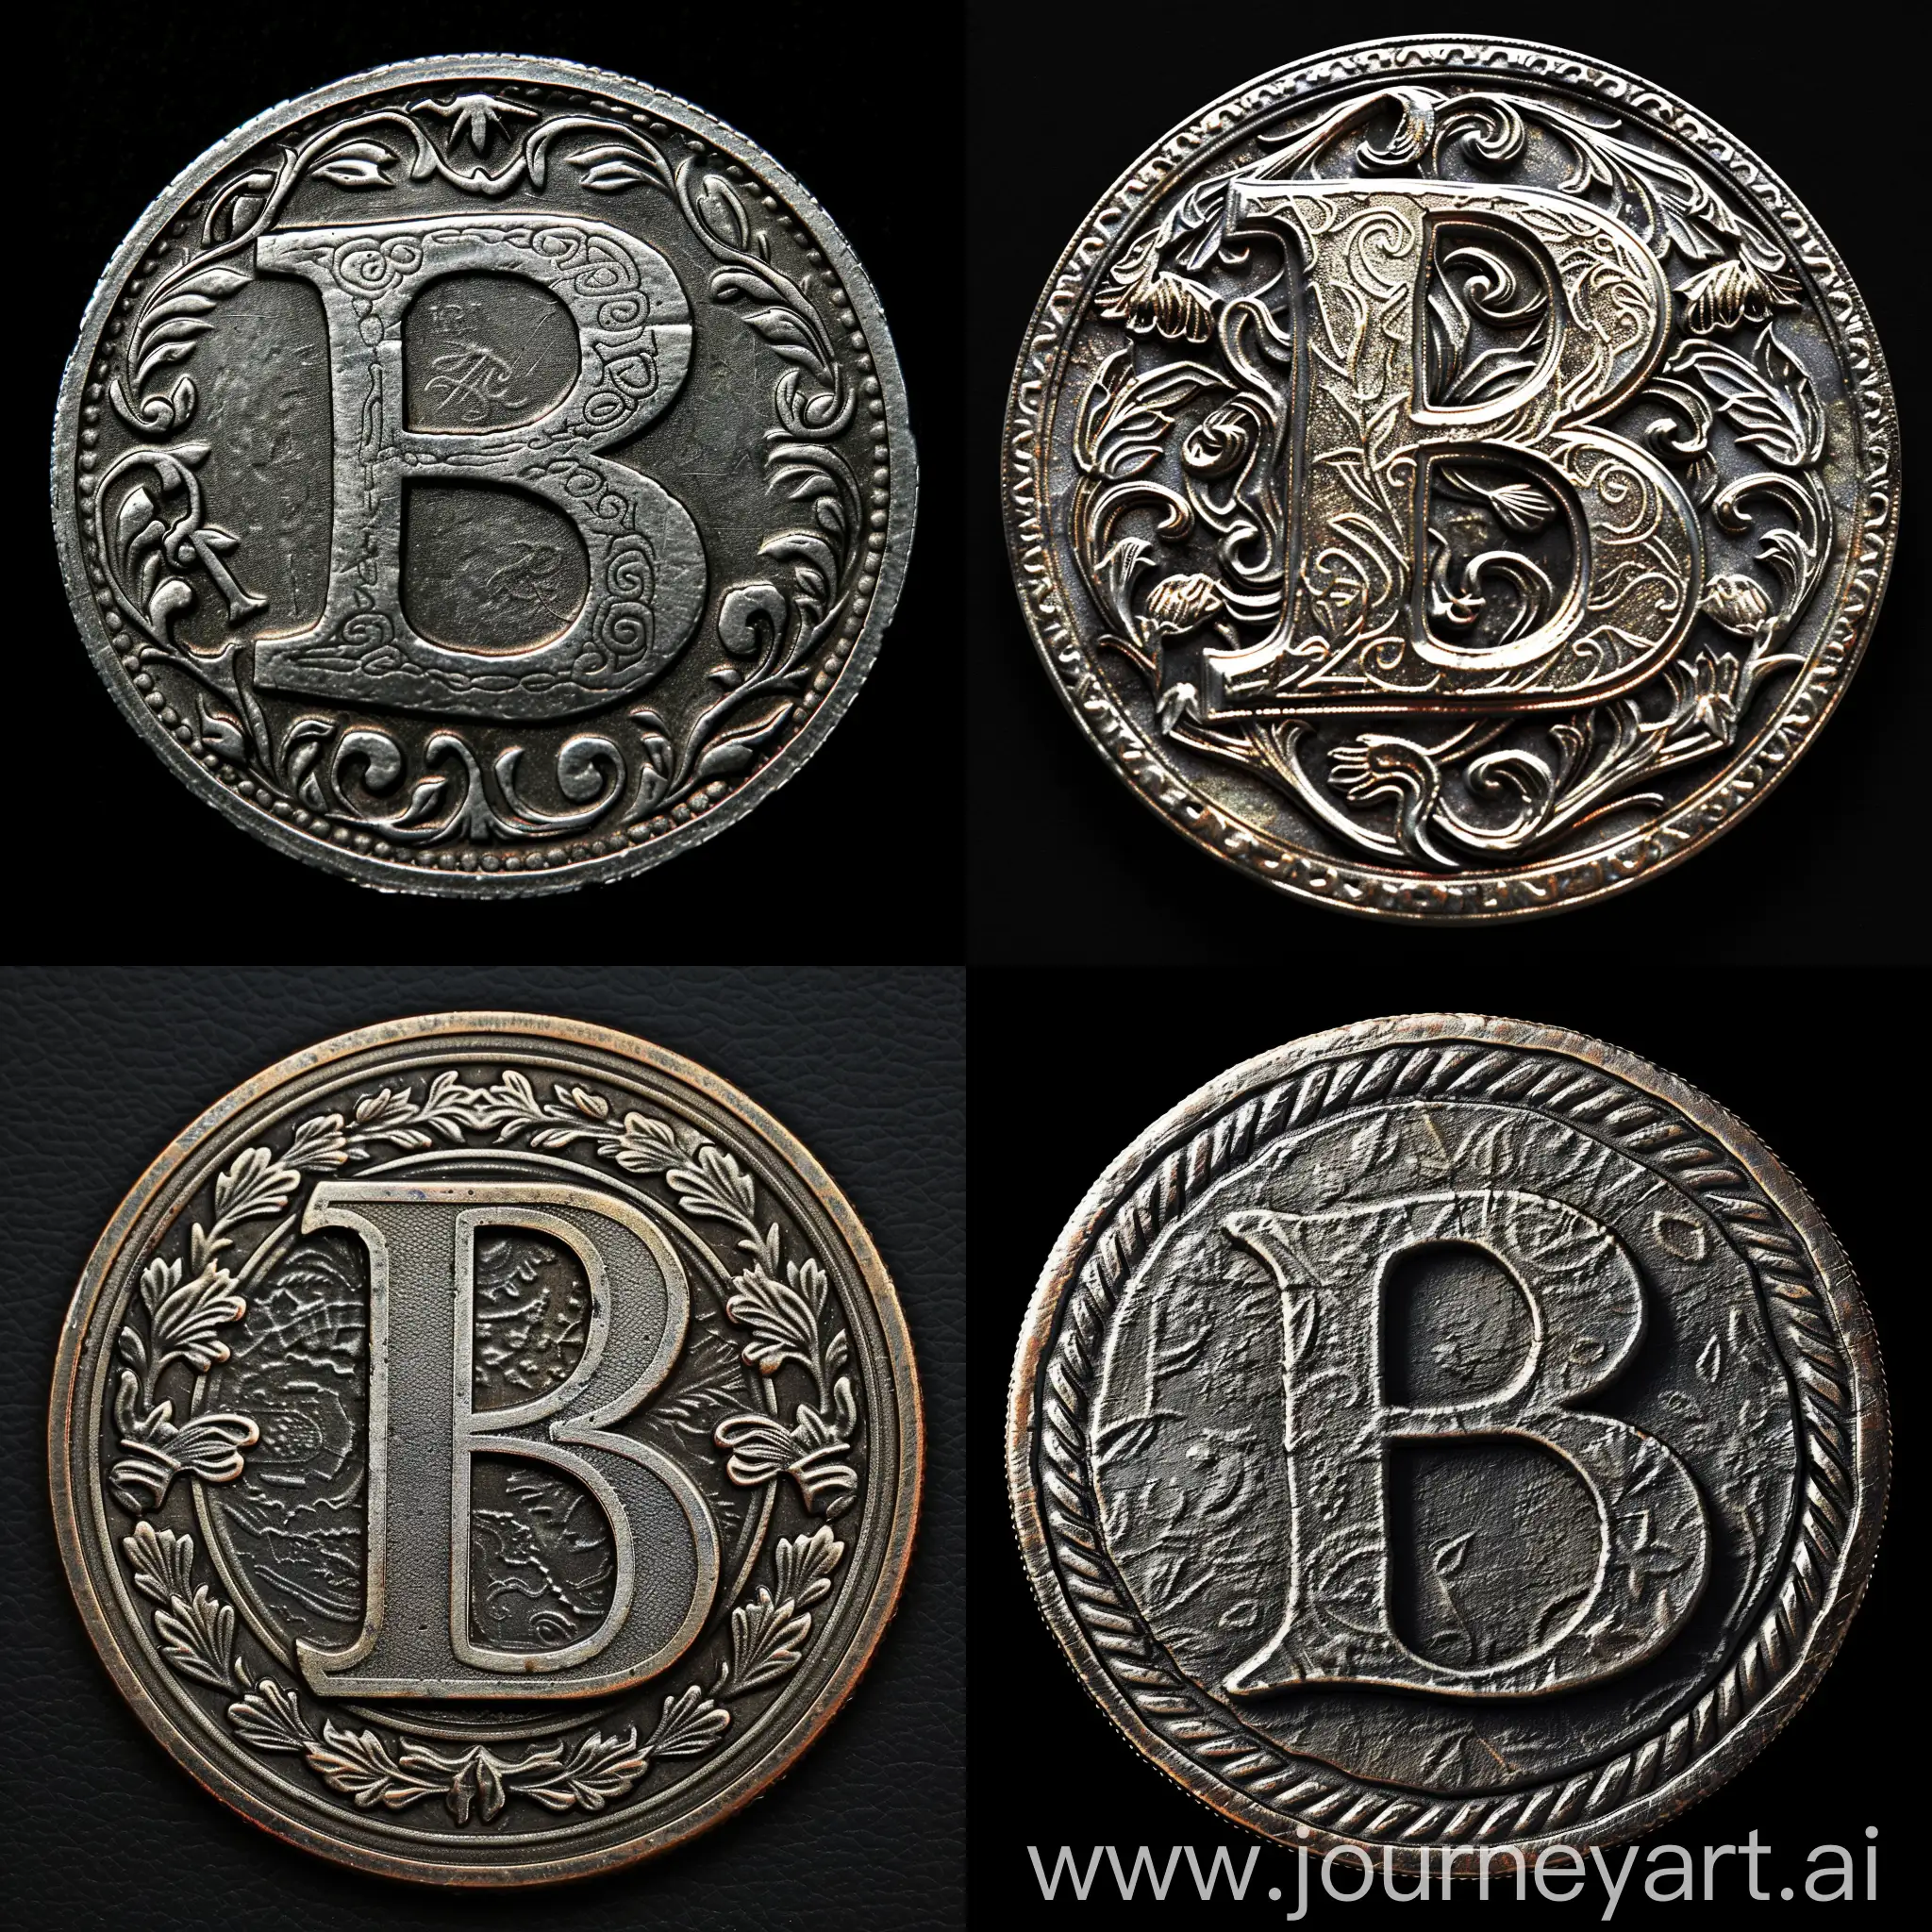 Detailed-Engraved-Letter-B-Coin-on-Black-Background